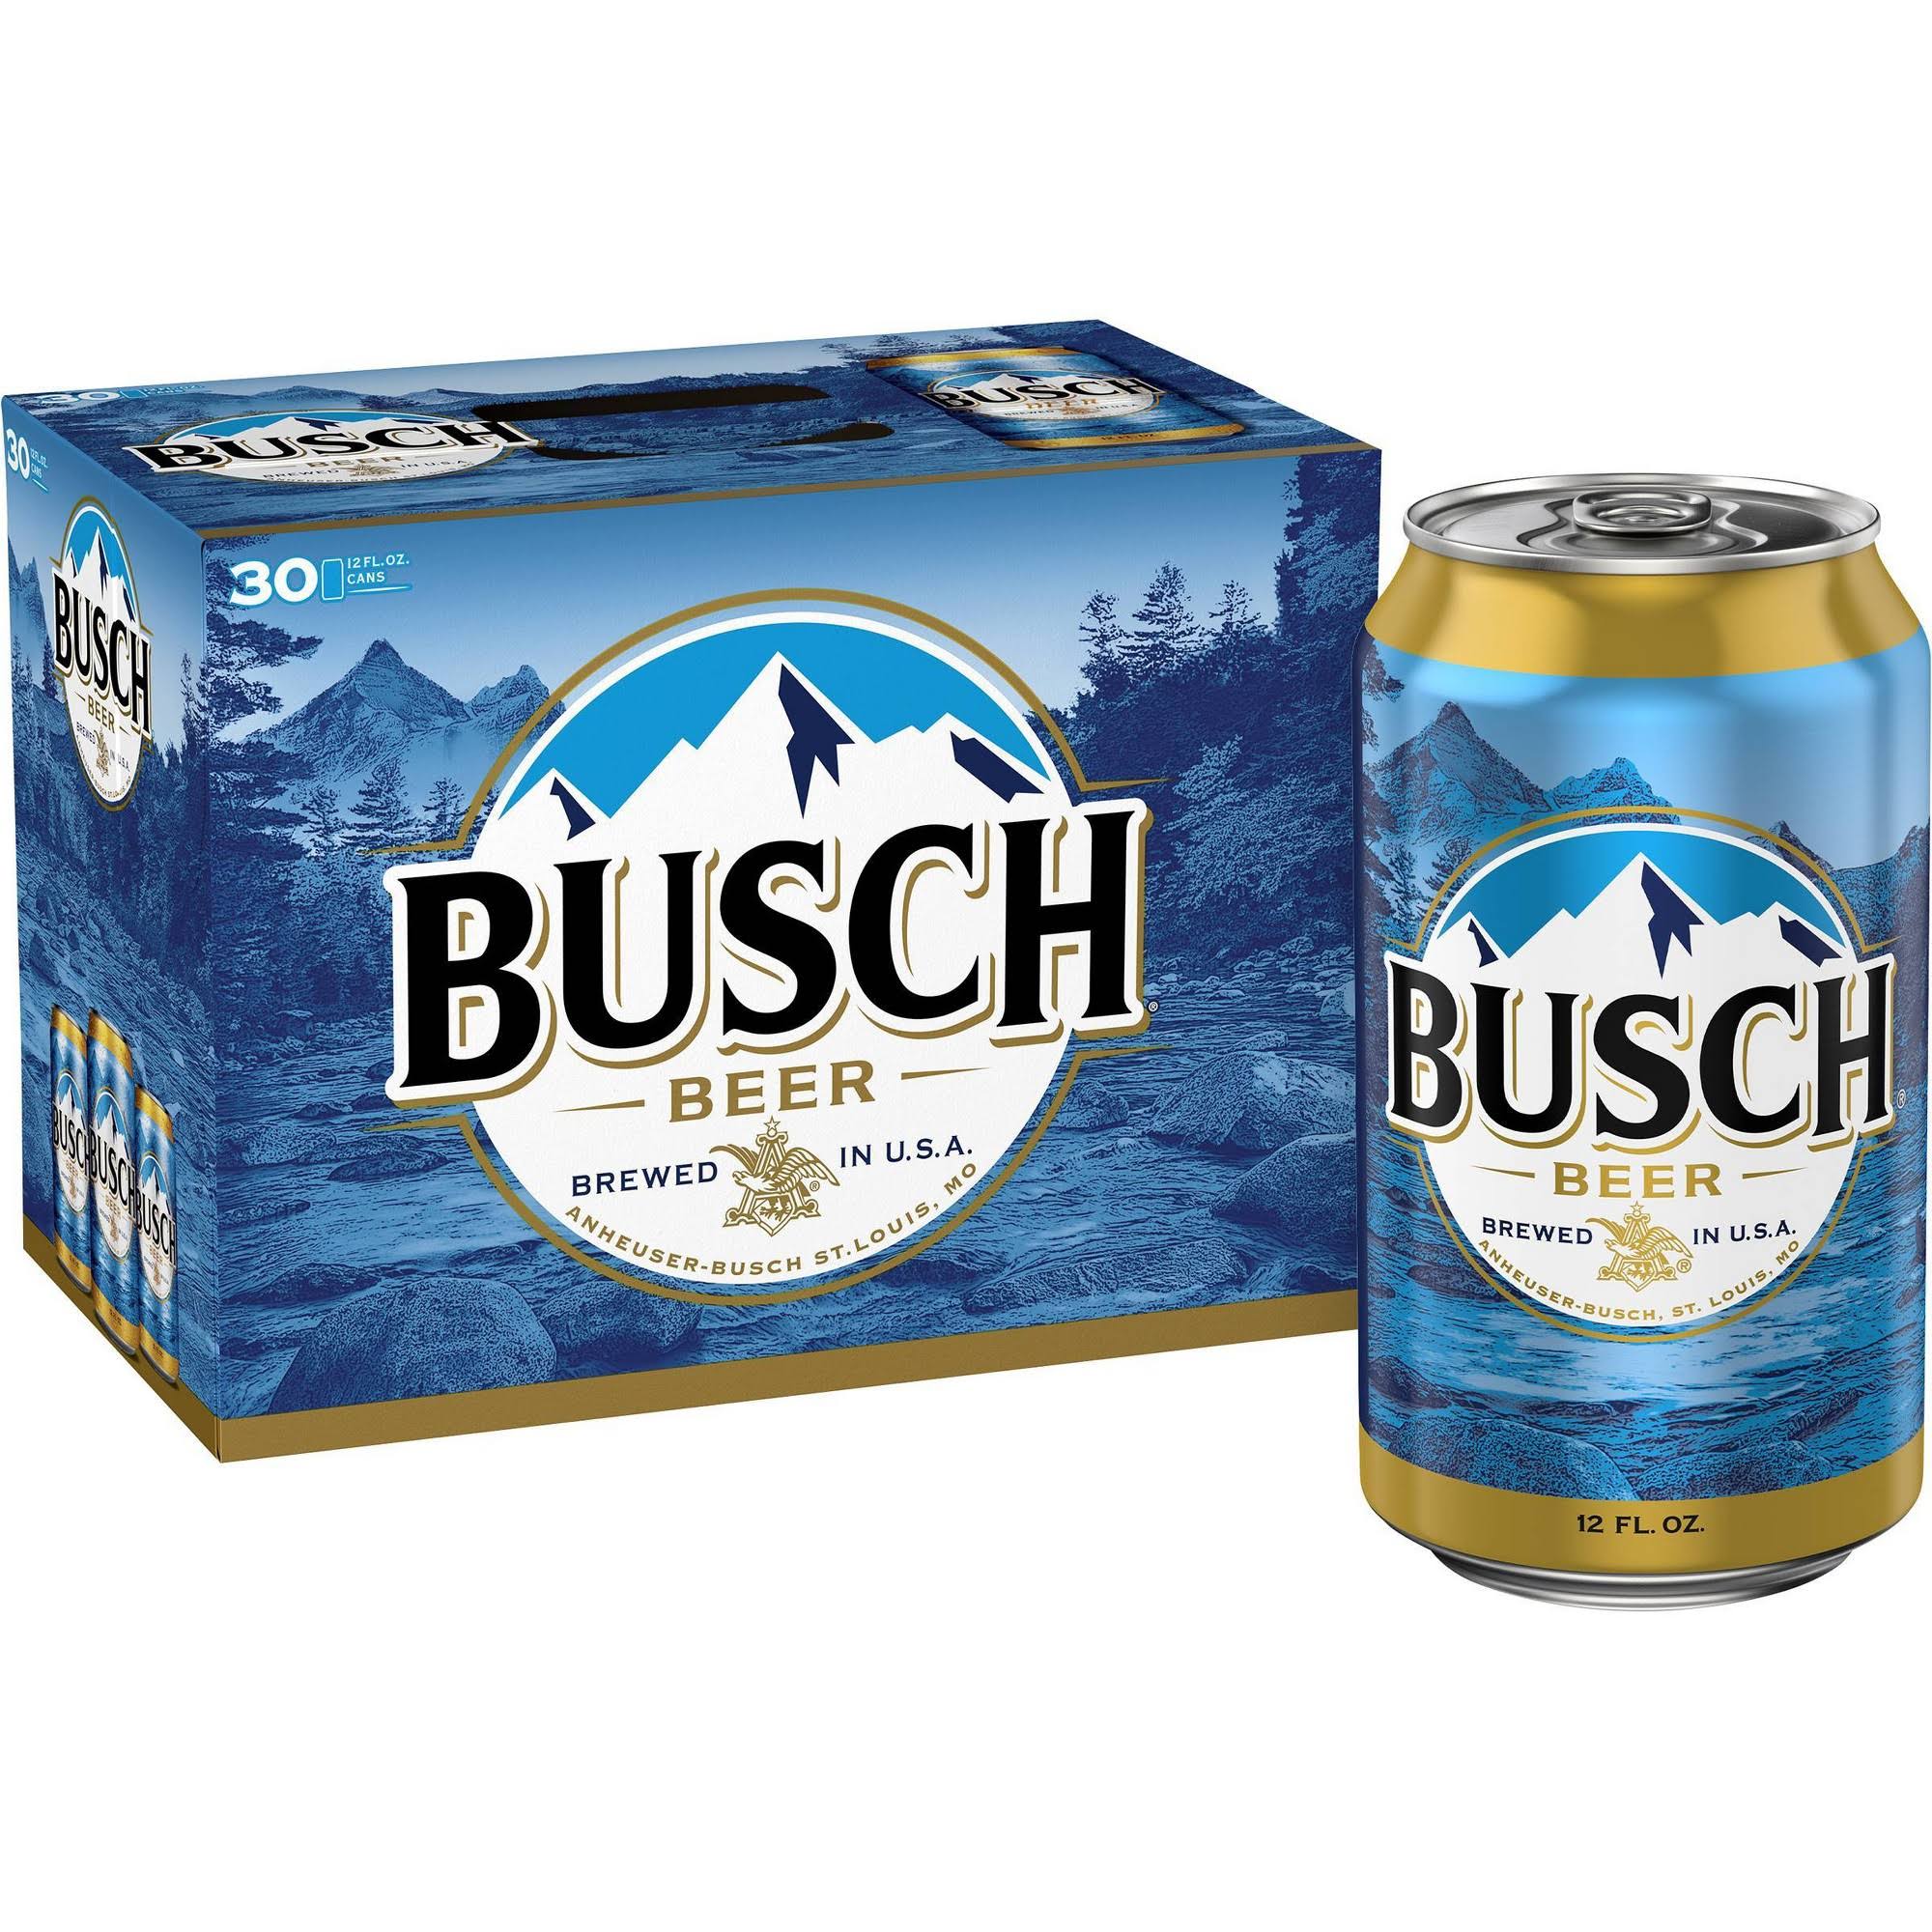 Busch Beer - 30 Cans